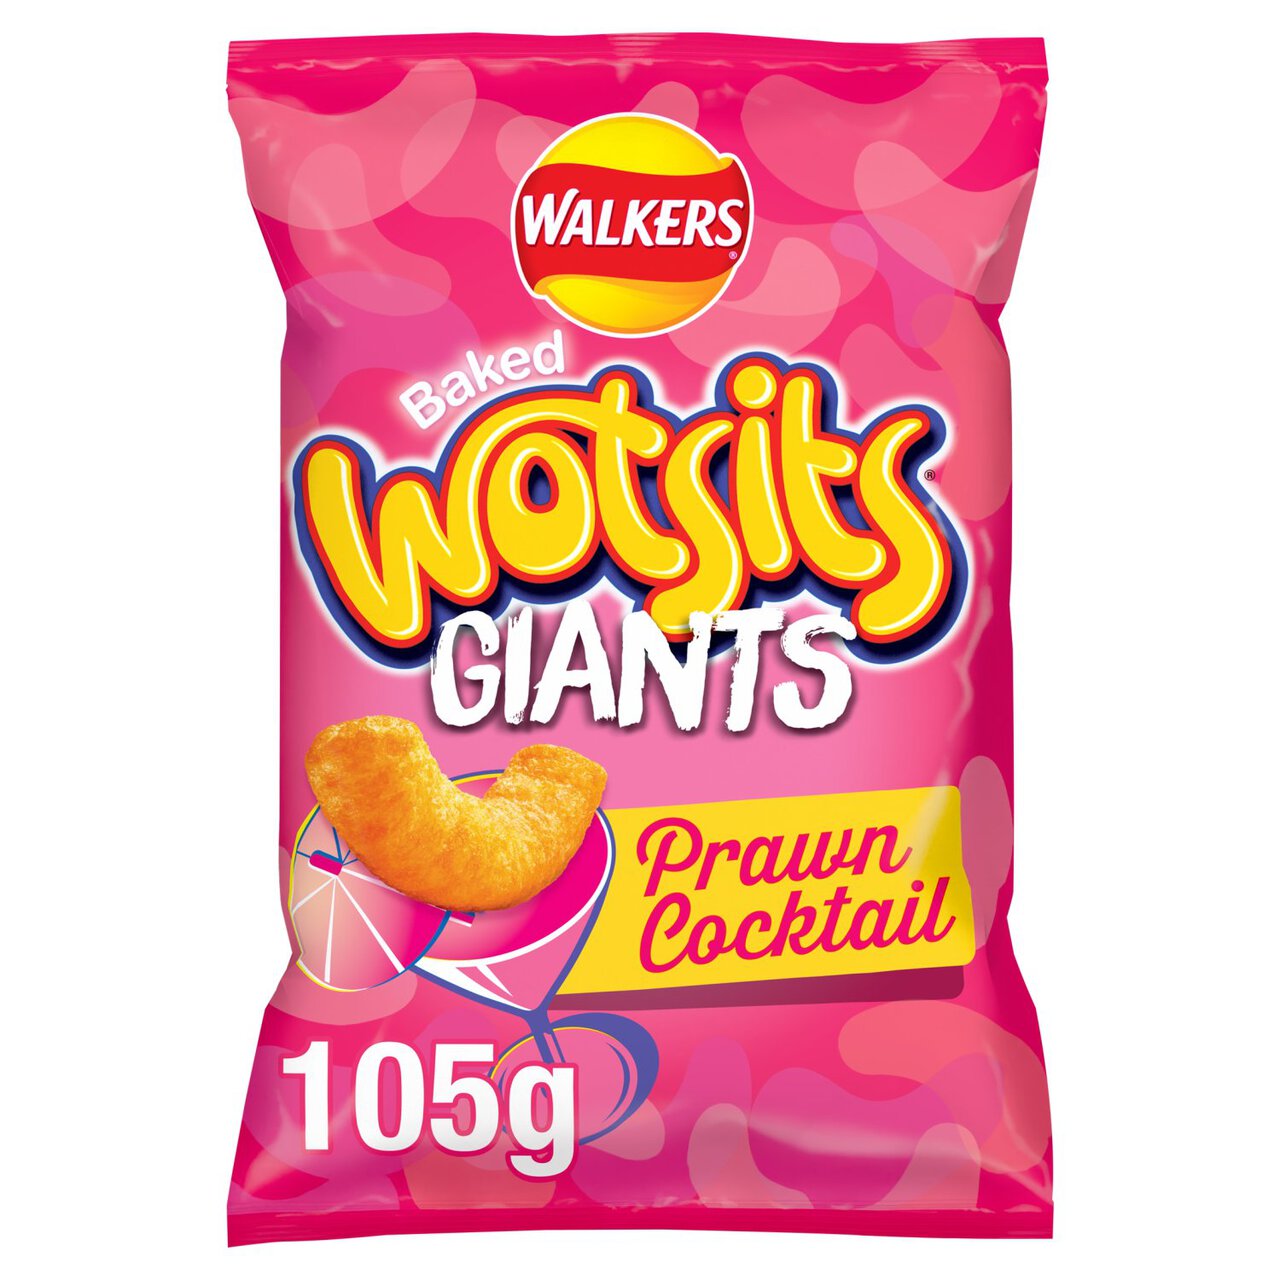 Walkers Wotsits Giants Prawn Cocktail Snacks 105g